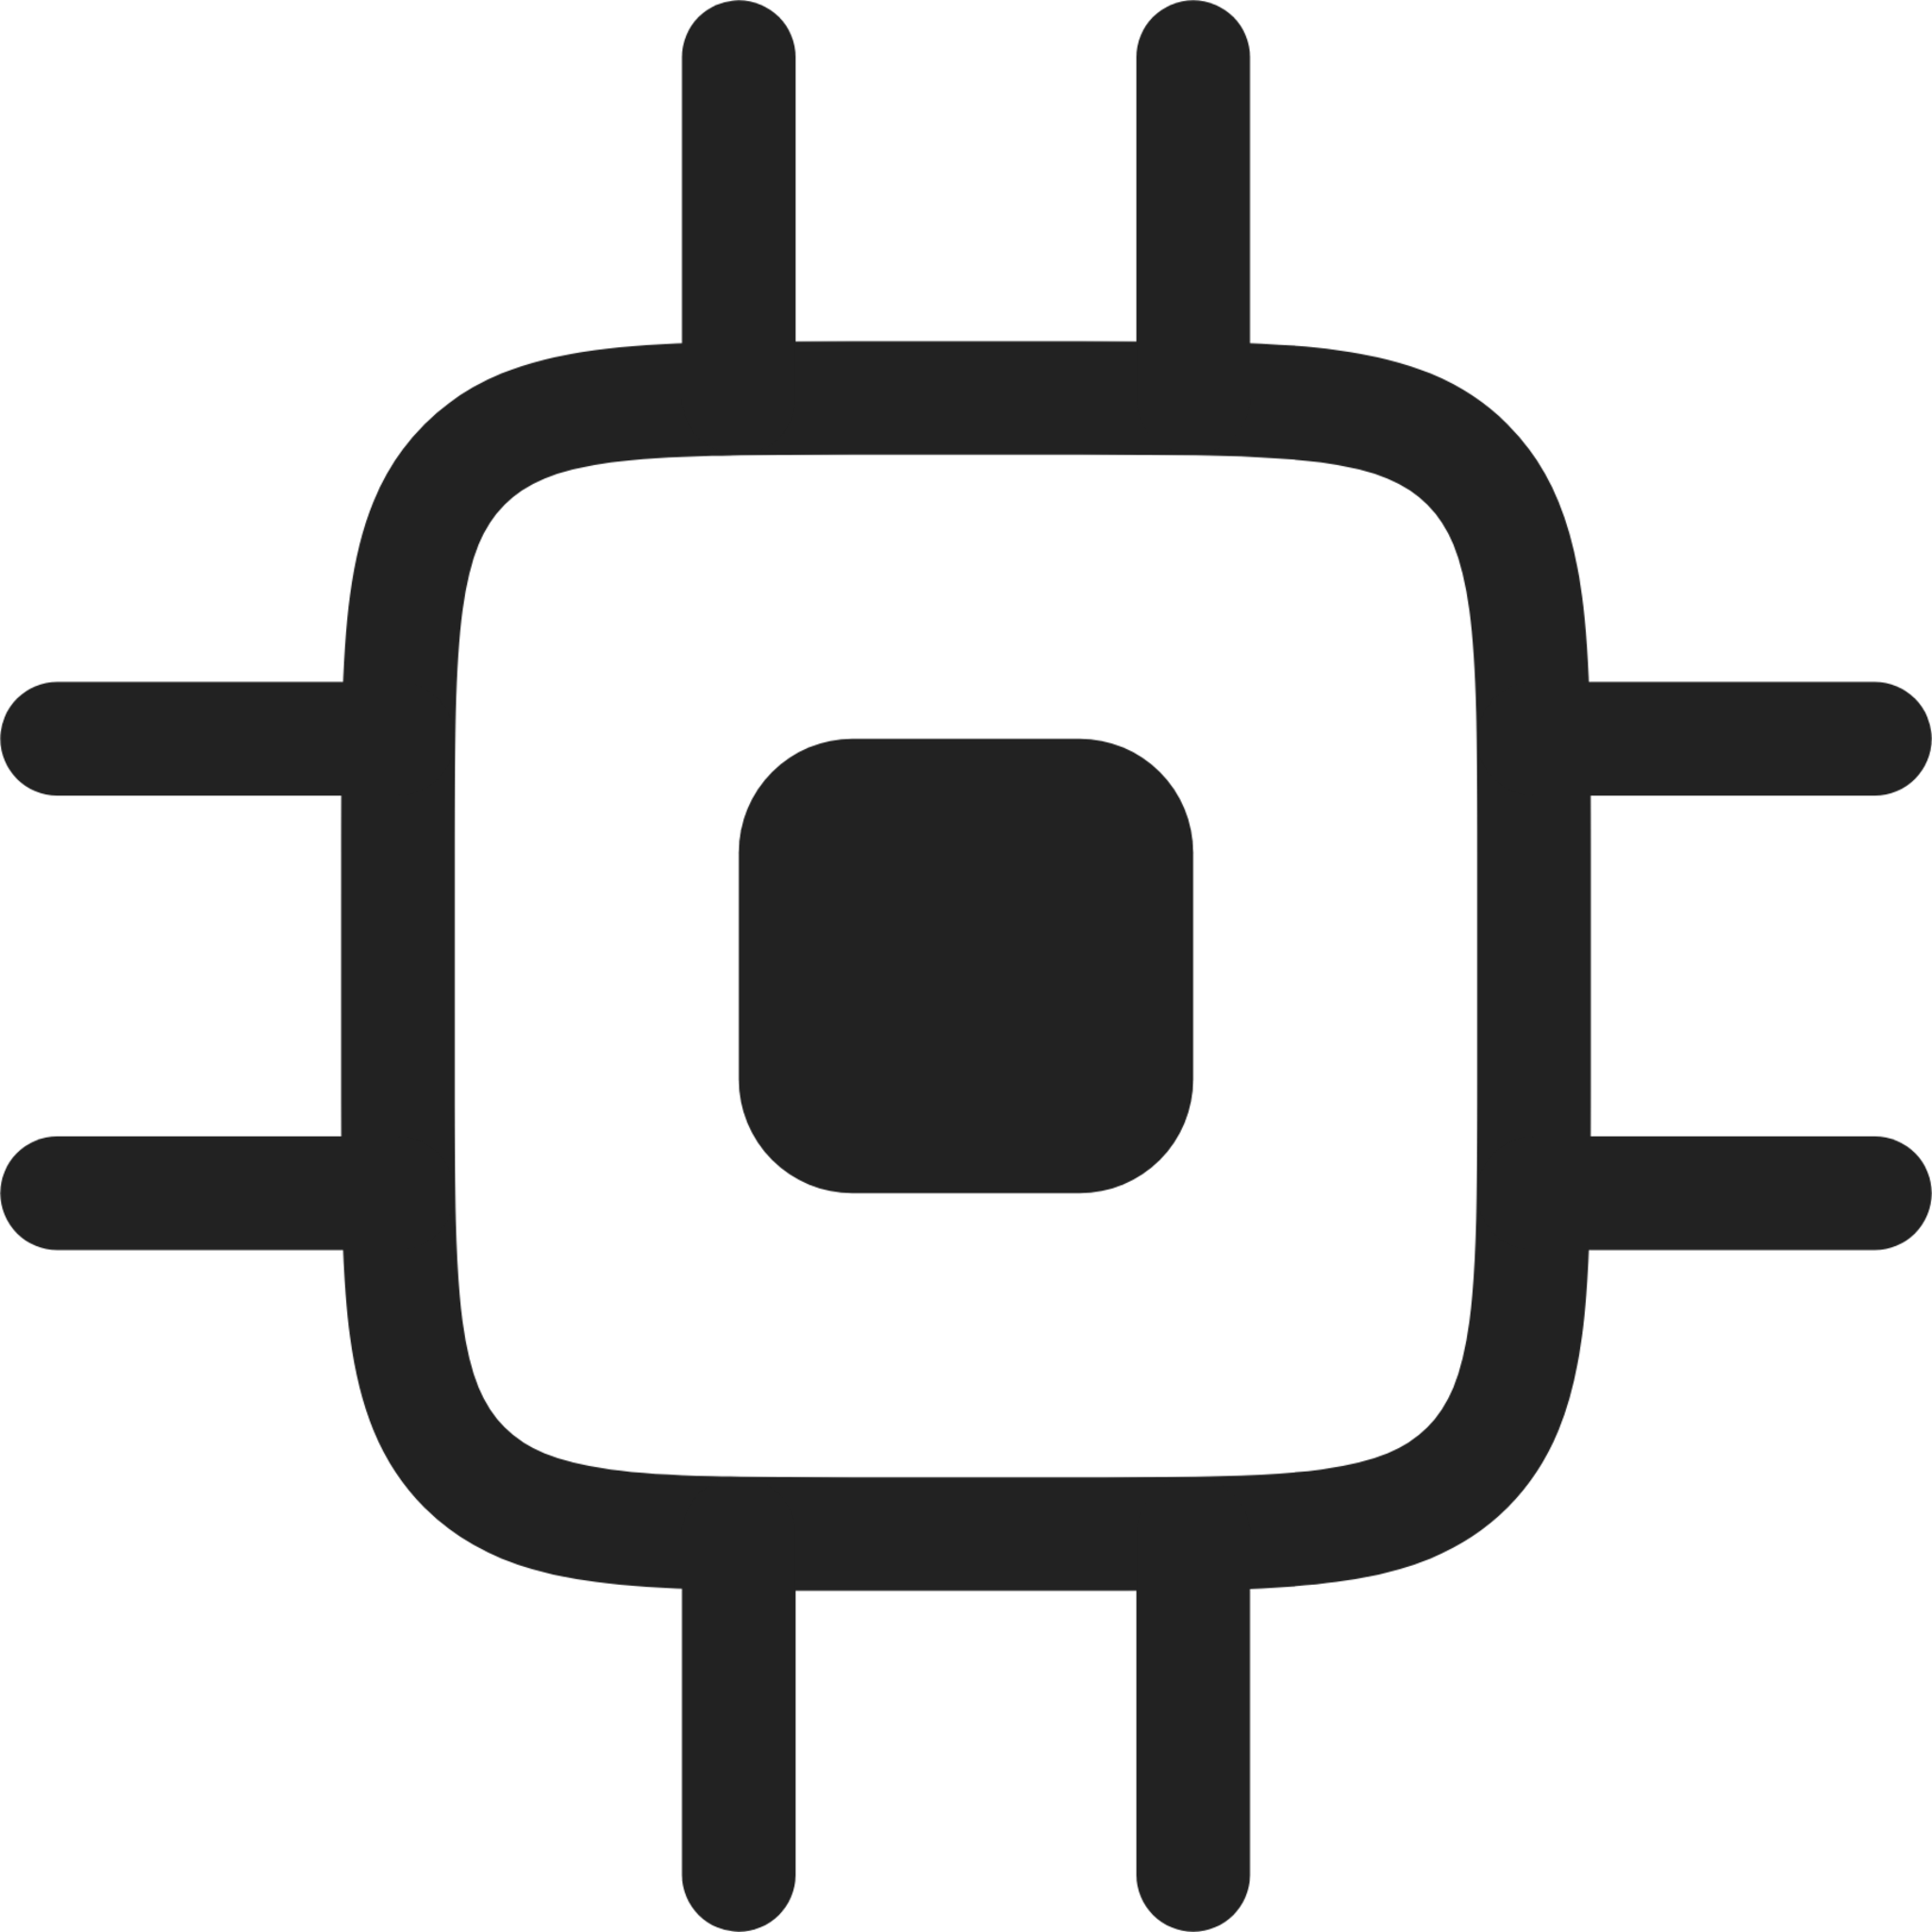 CPU light icon